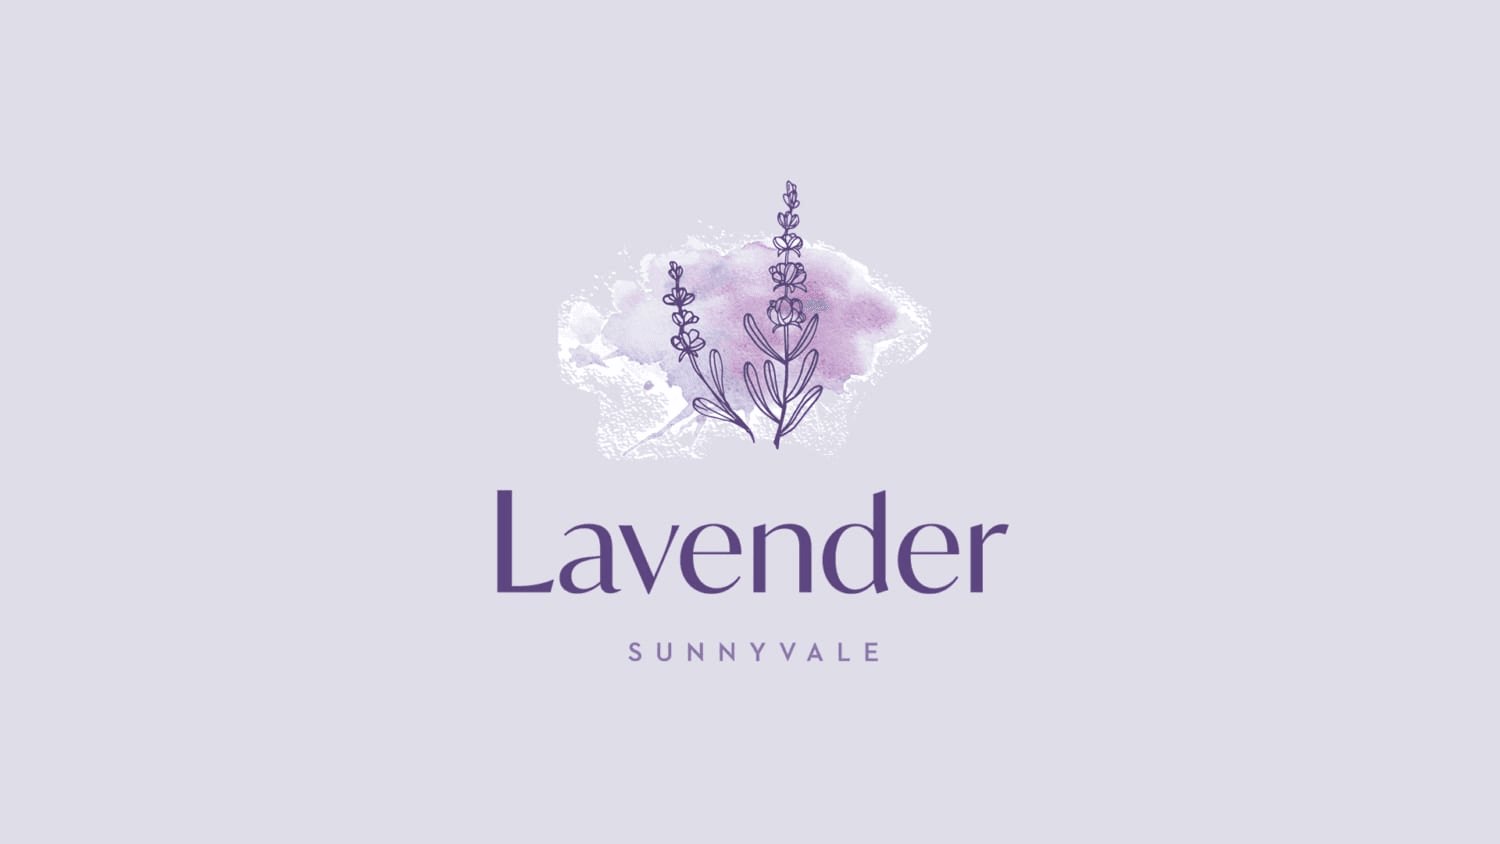 8. Lavender building at 1320 Civic Center Dr, Santa Clara, CA 95050